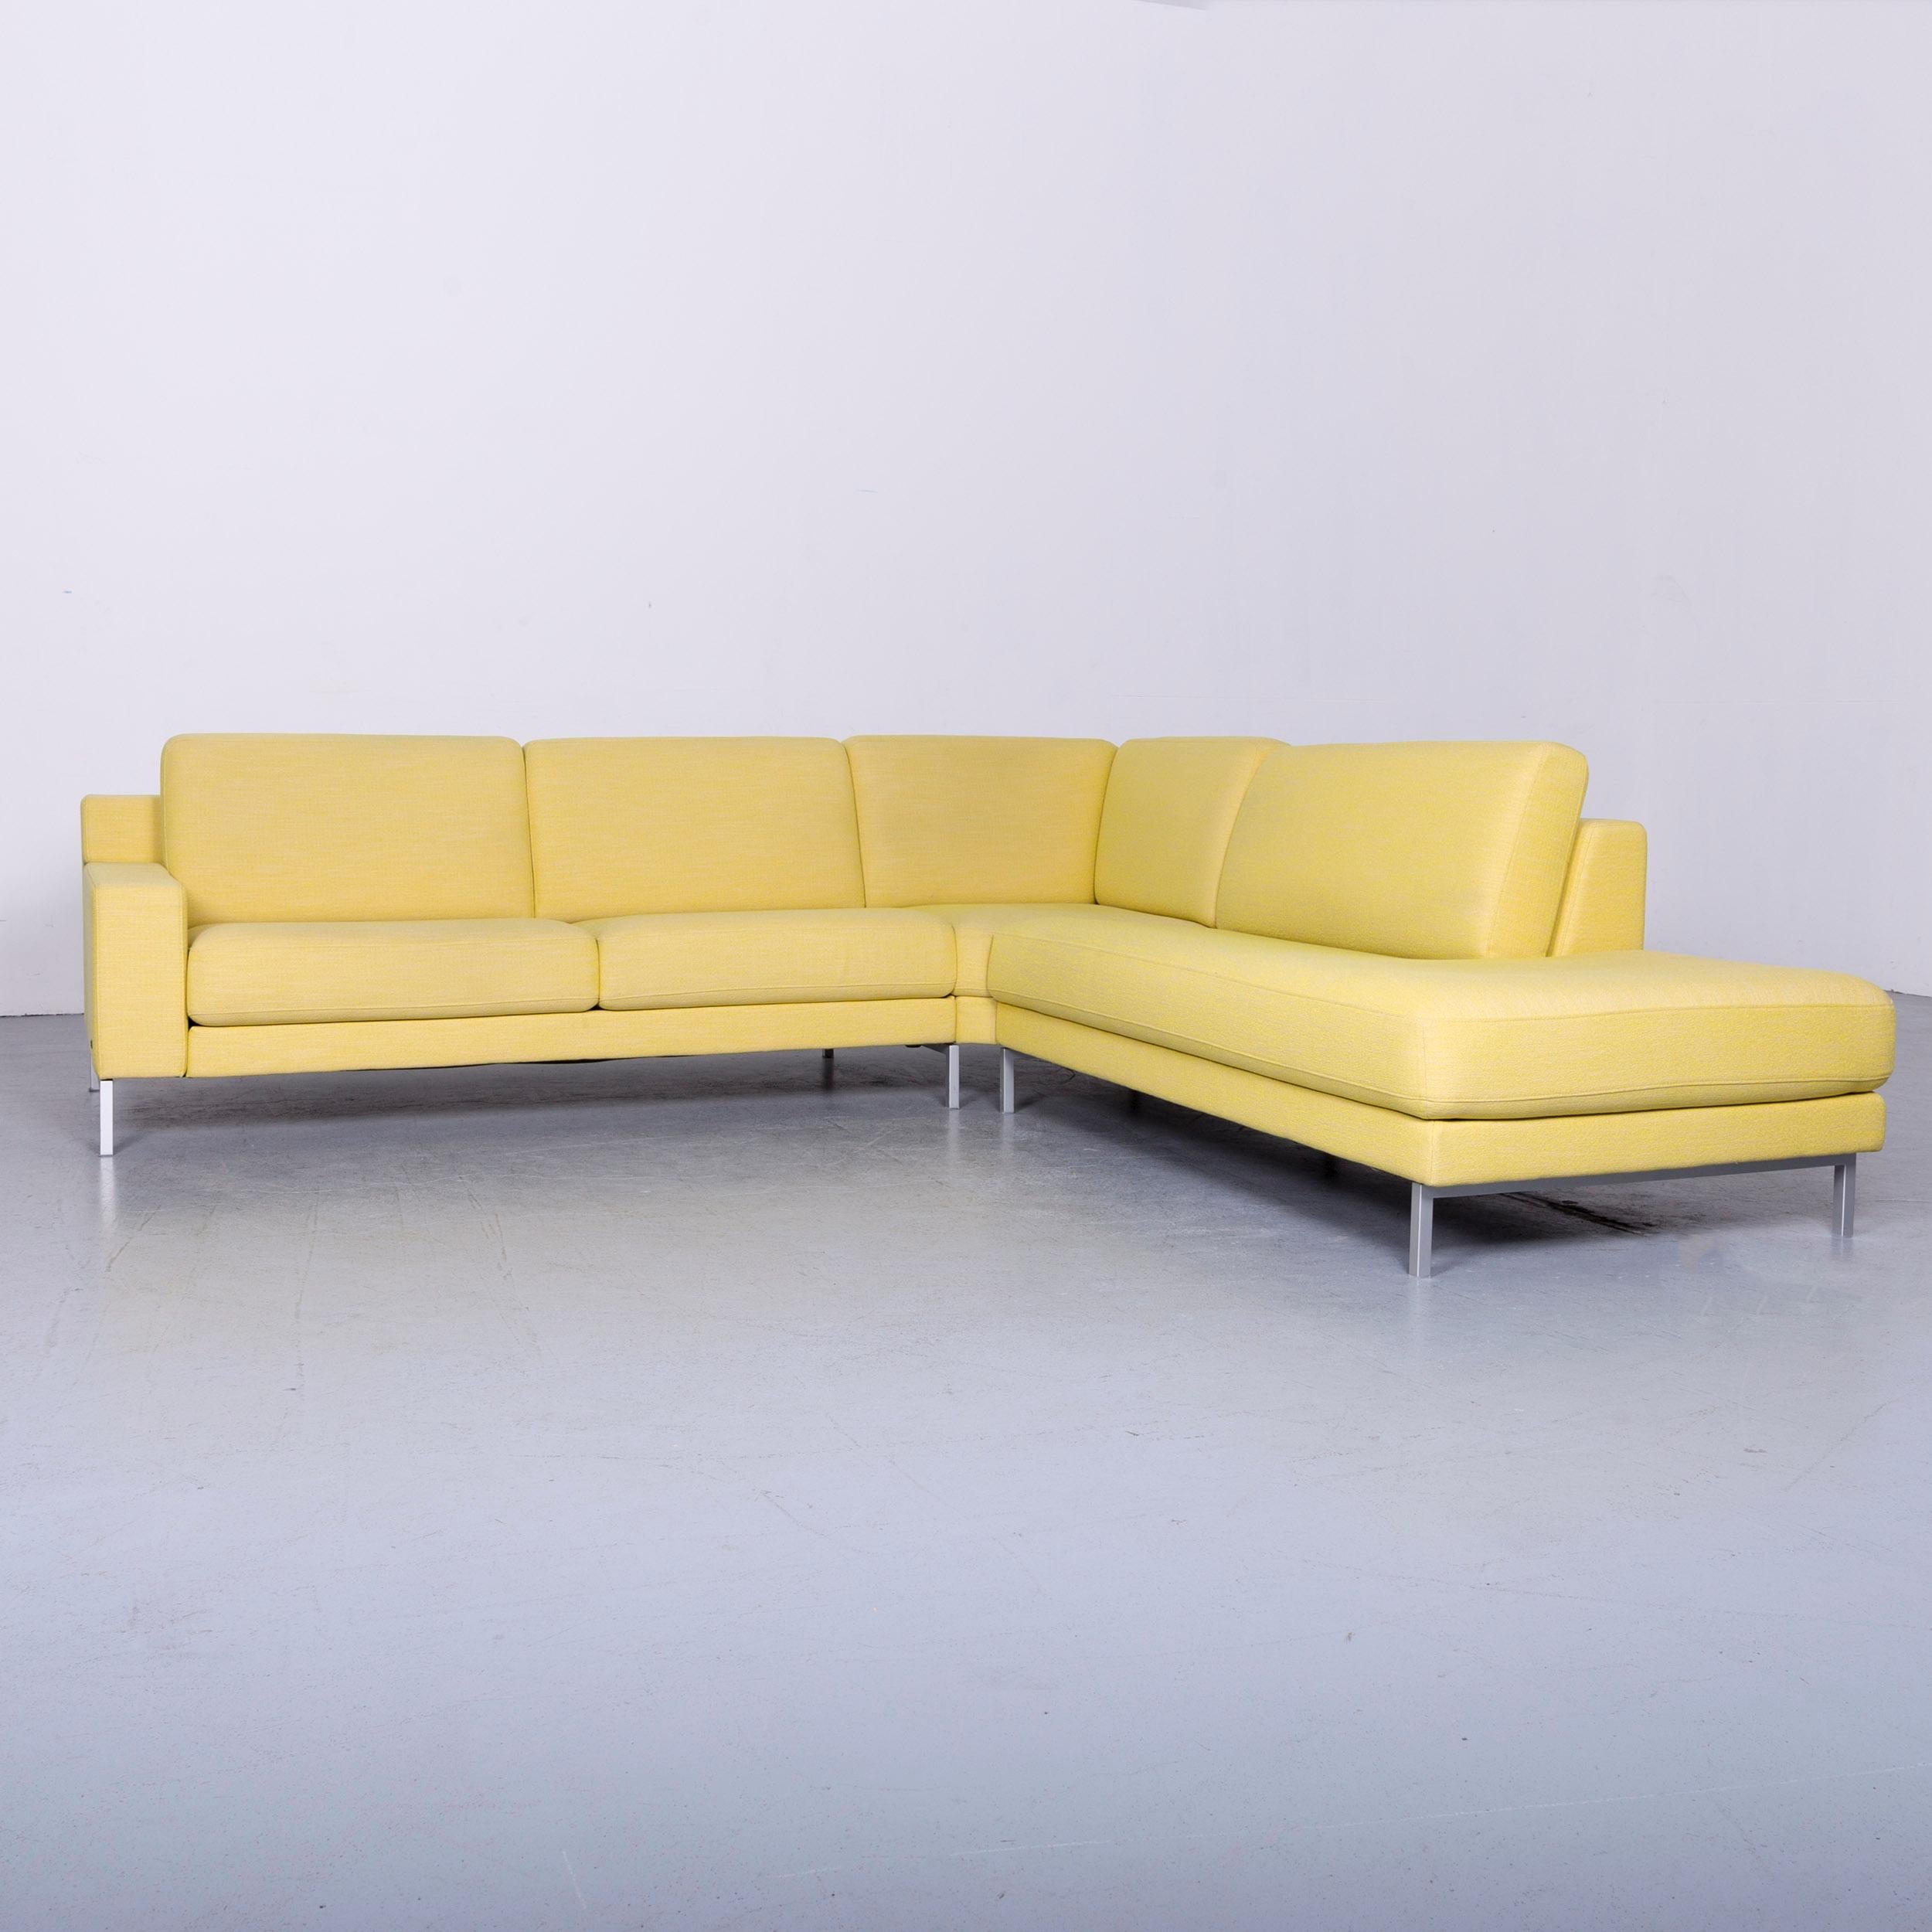 We bring to you a Rolf Benz ego designer fabric corner sofa yellow.